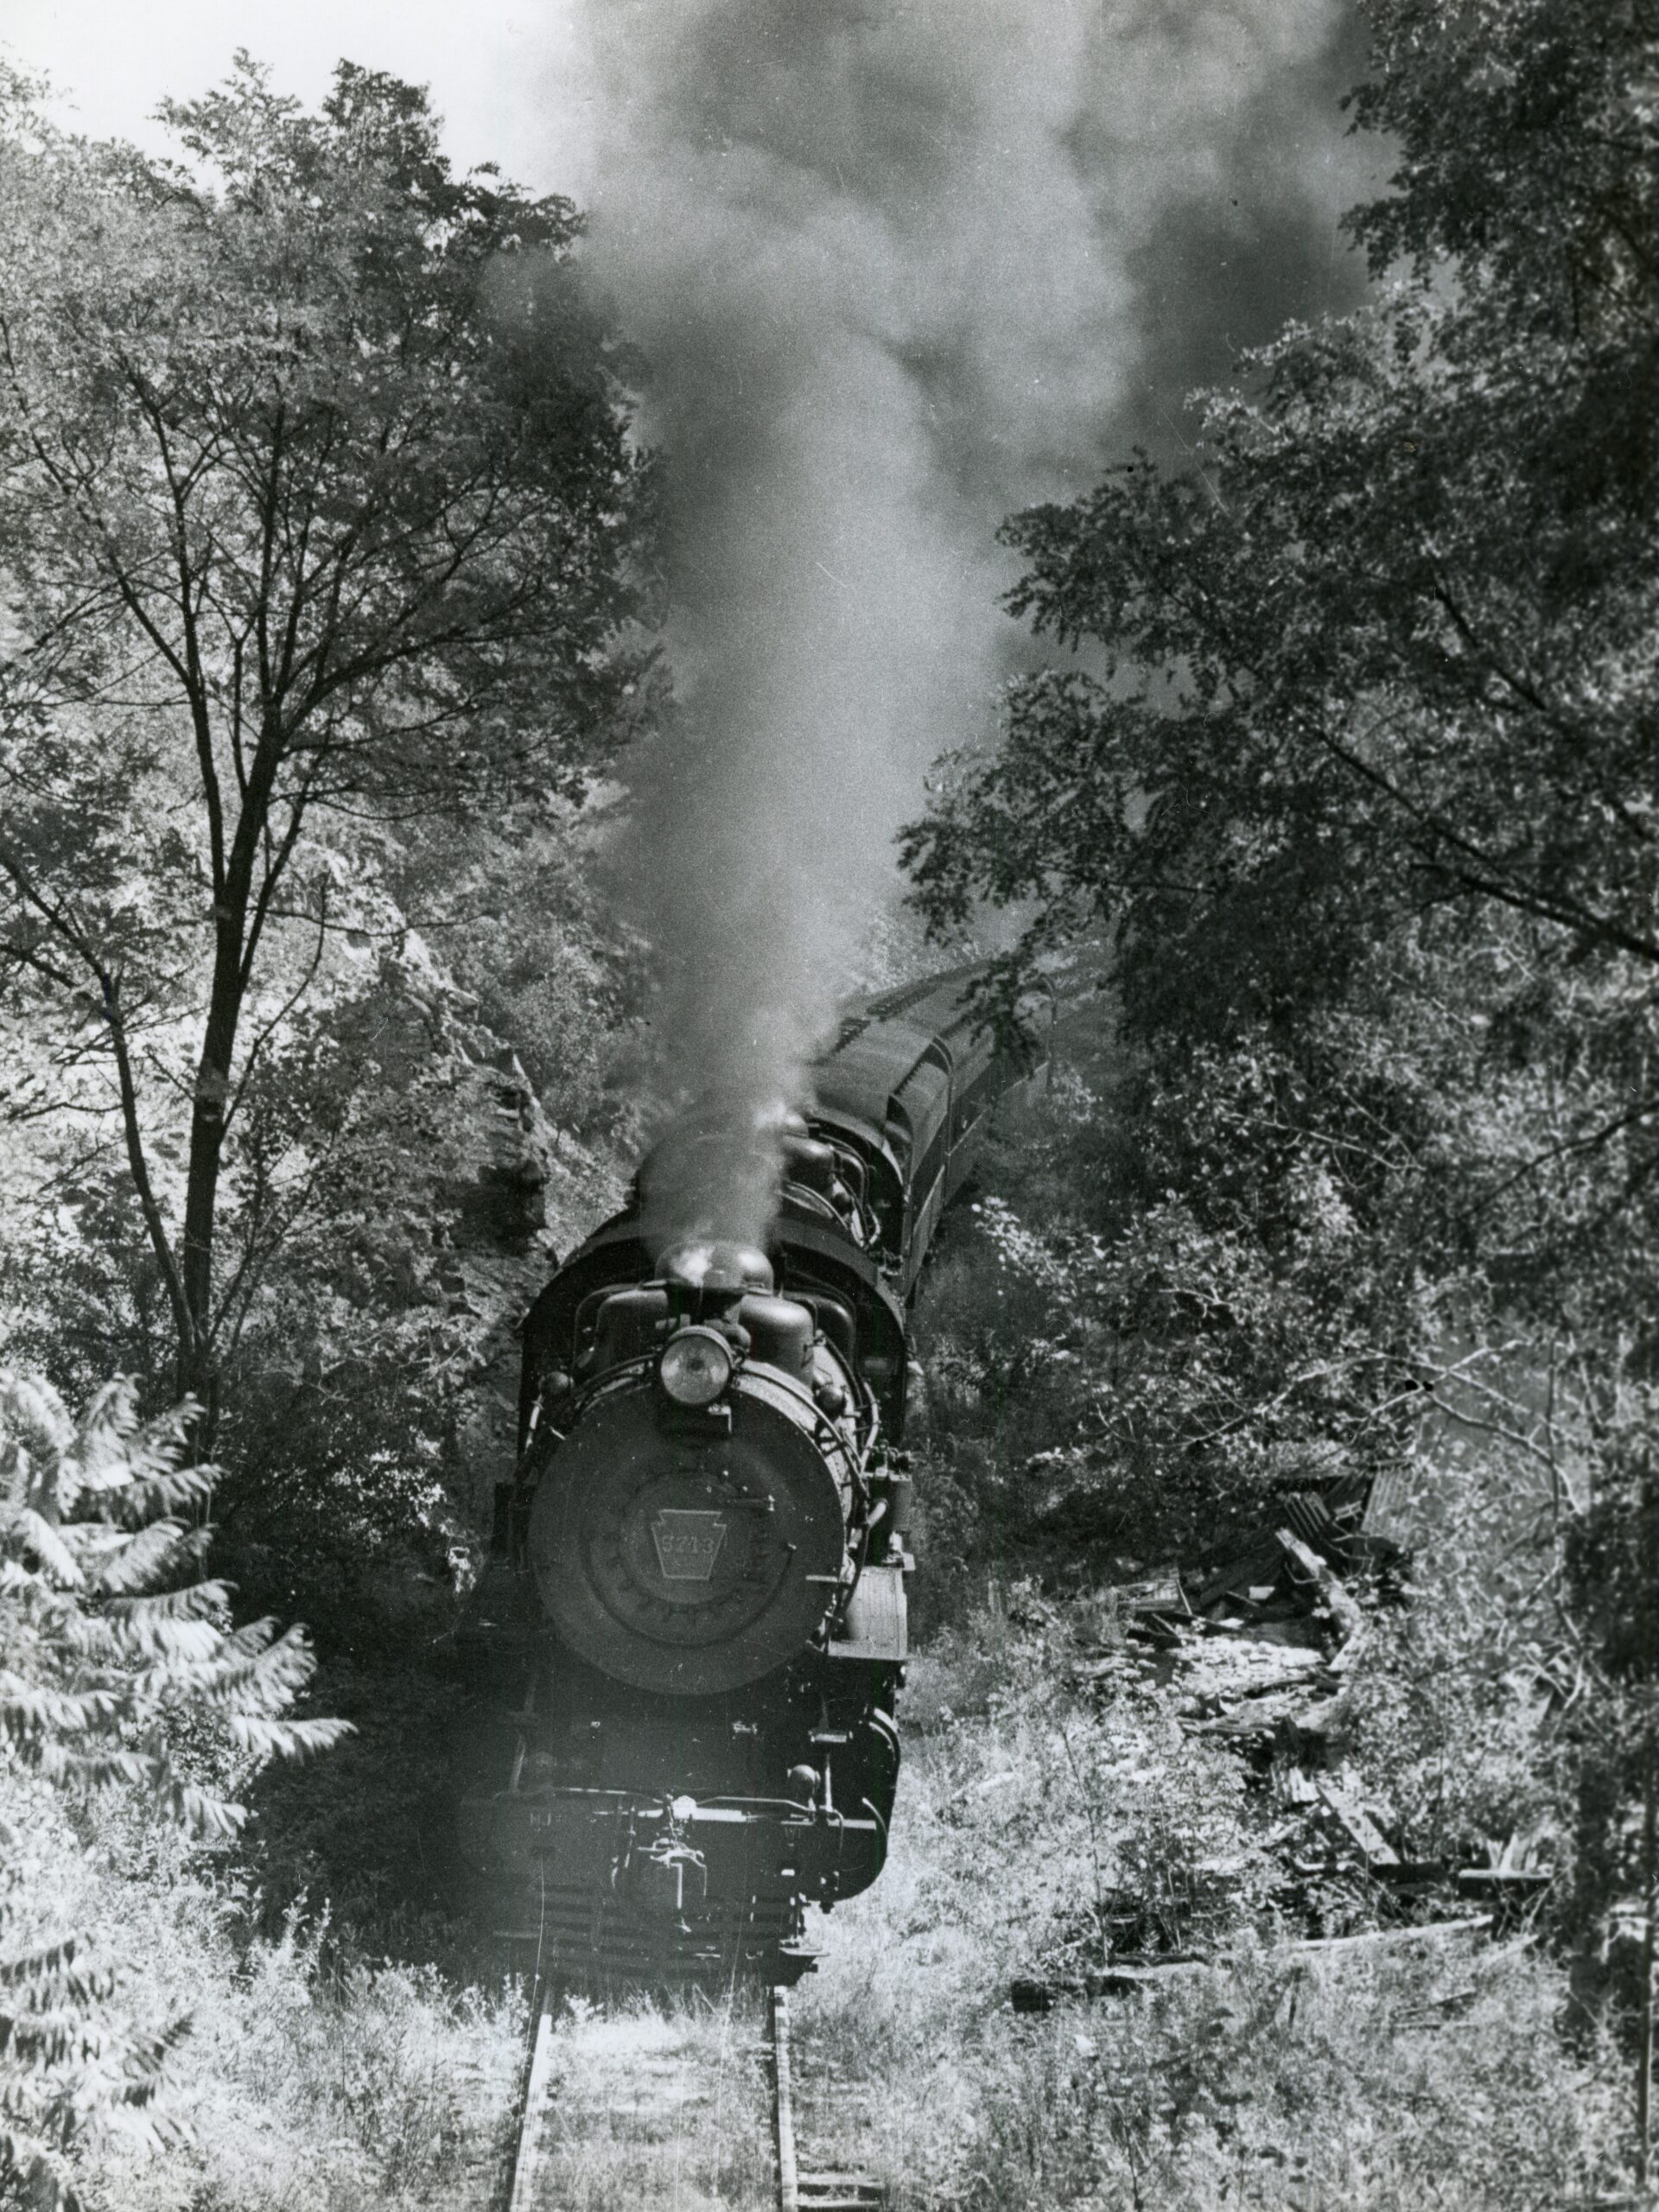 Pennsylvania Railroad | Welsh Mountain, Pennsylvania | New Holland Branch | G5 5713 & 1960 | Off the Beaten Track trip | William Moedinger photo | September 29, 1940